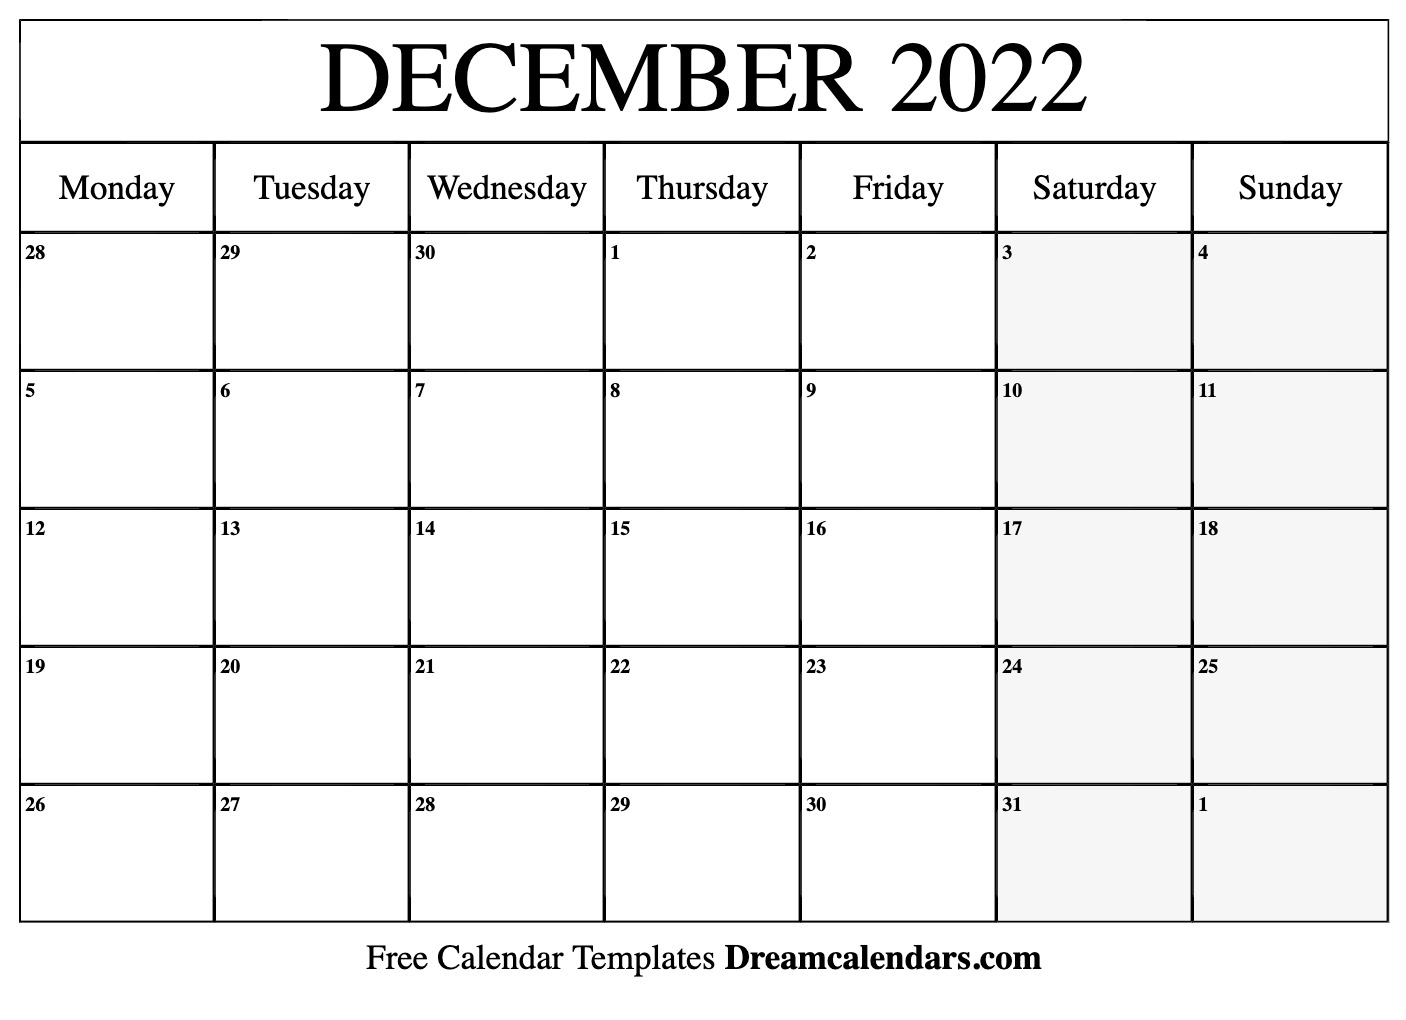 December 2022 Calendar Free Blank Printable Templates